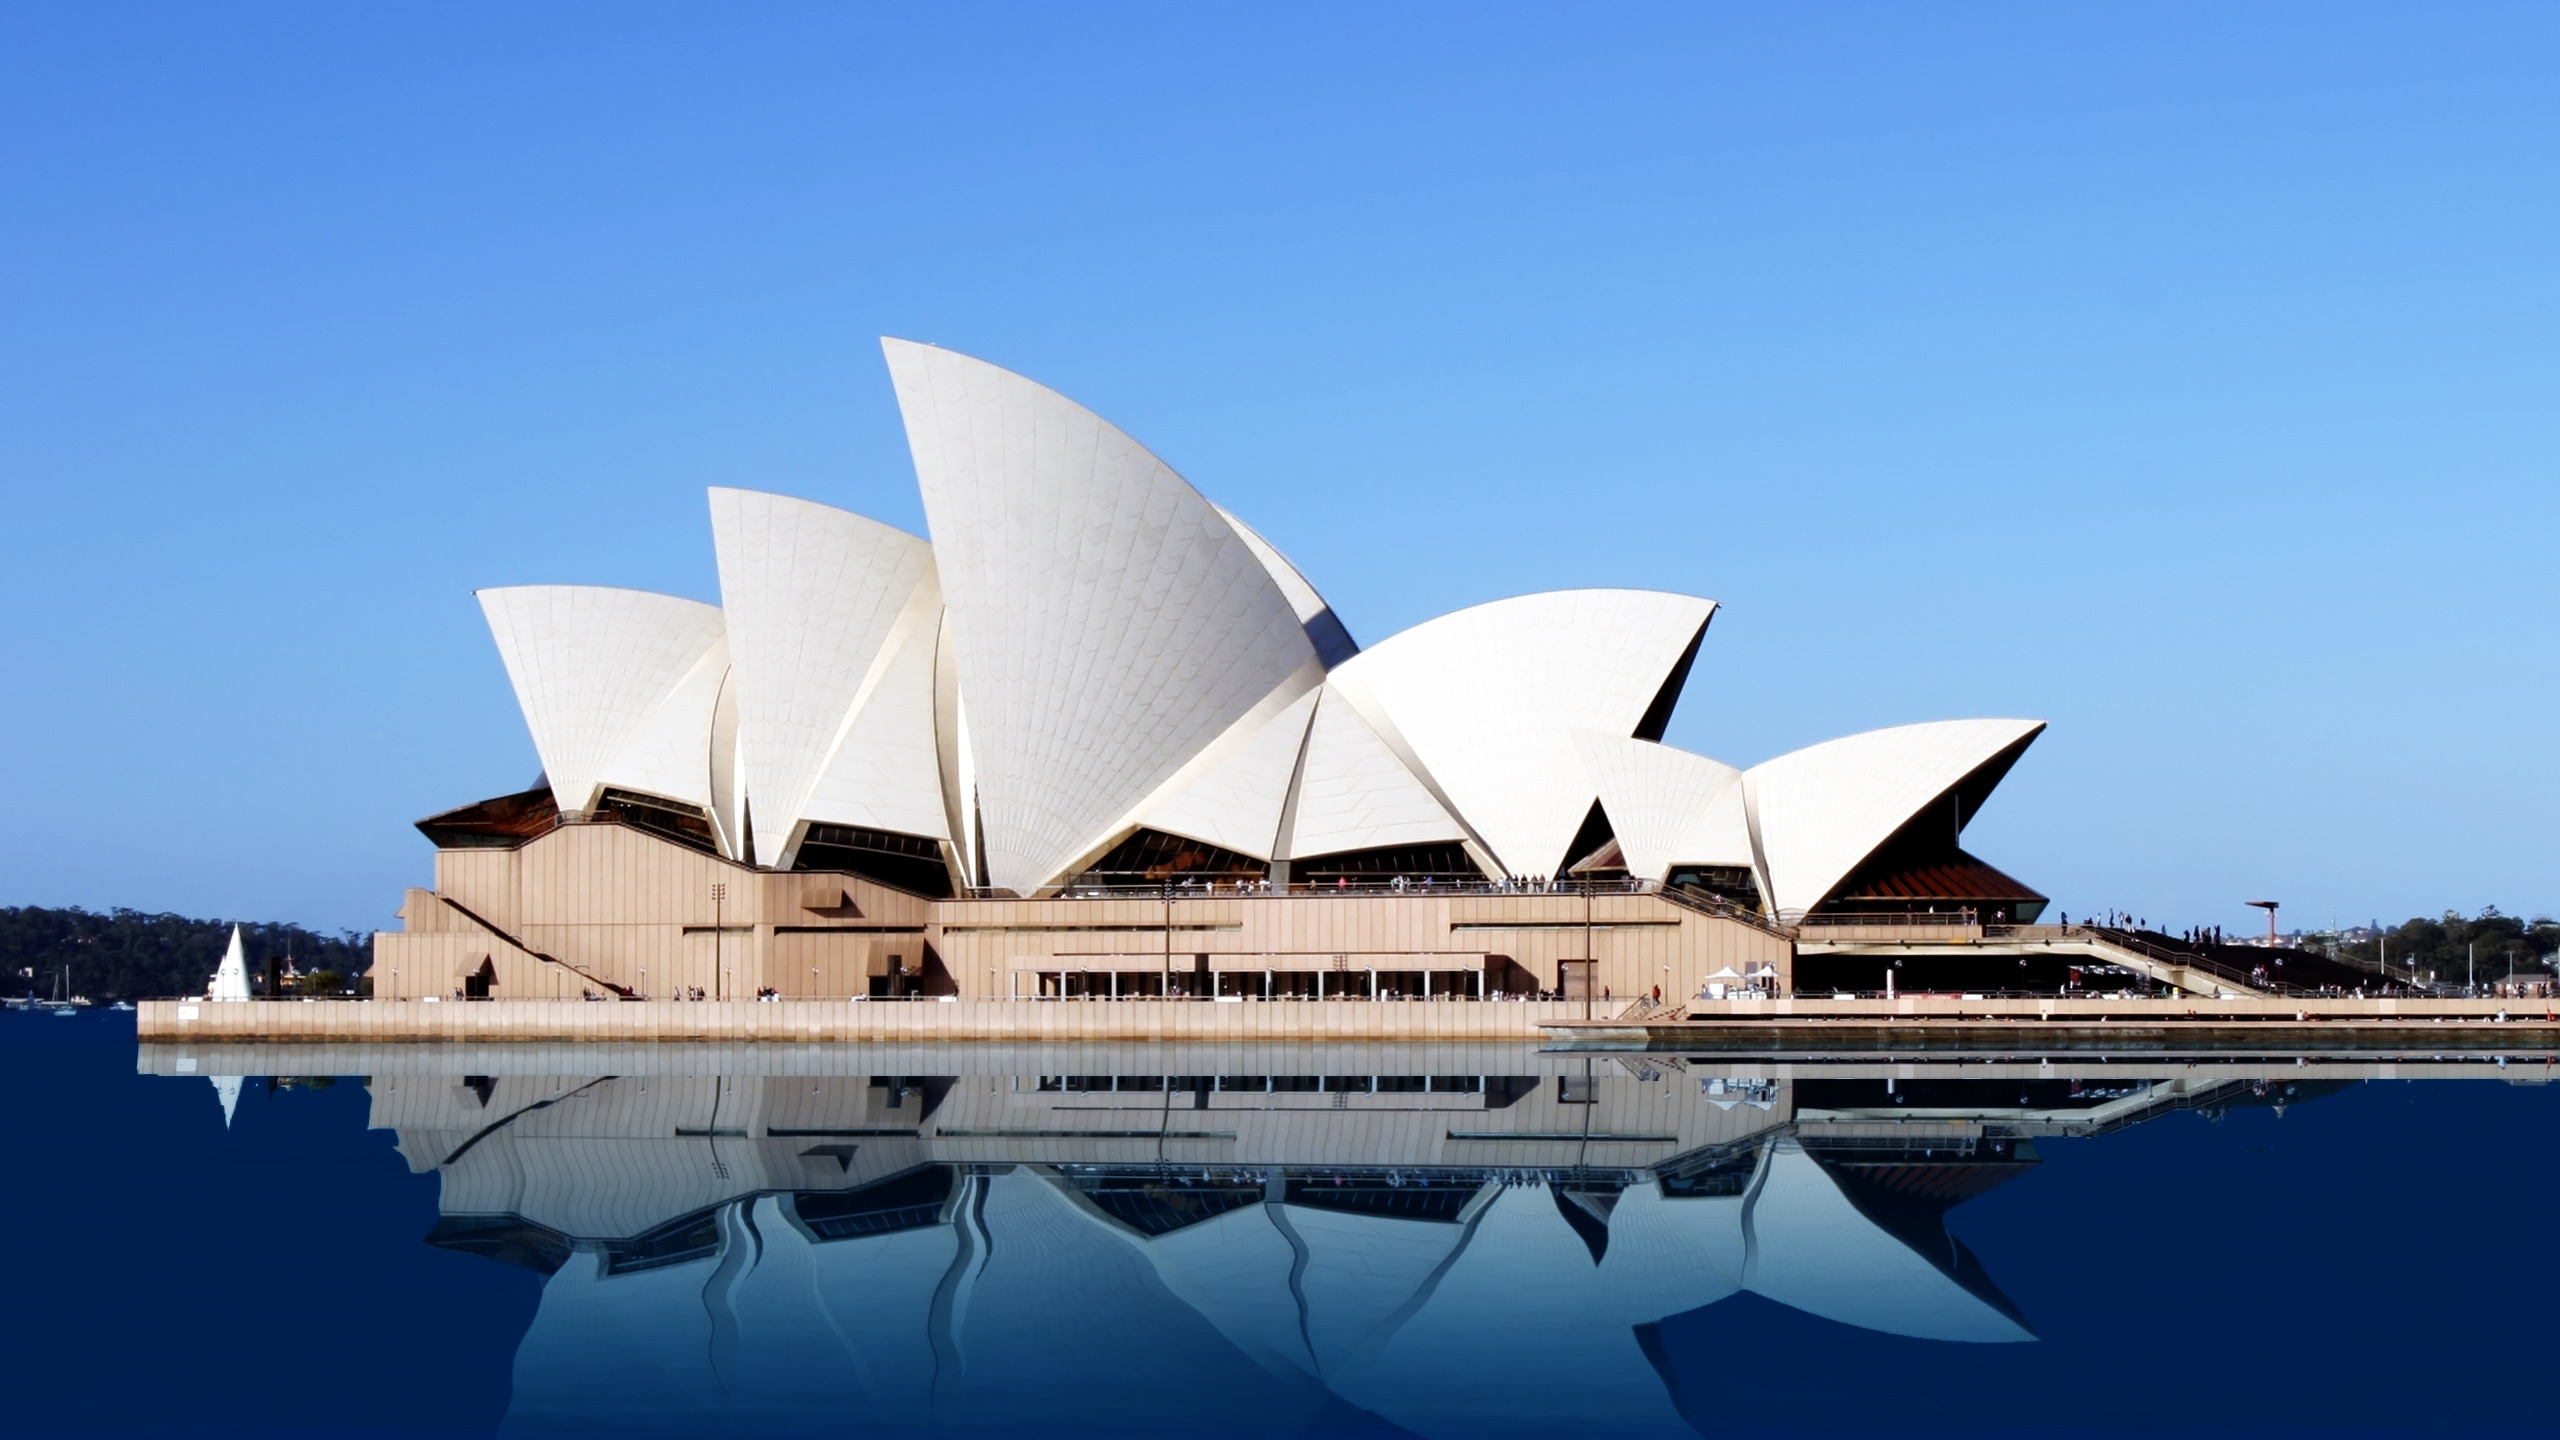 Sydney Opera House for 2560x1440 HDTV resolution